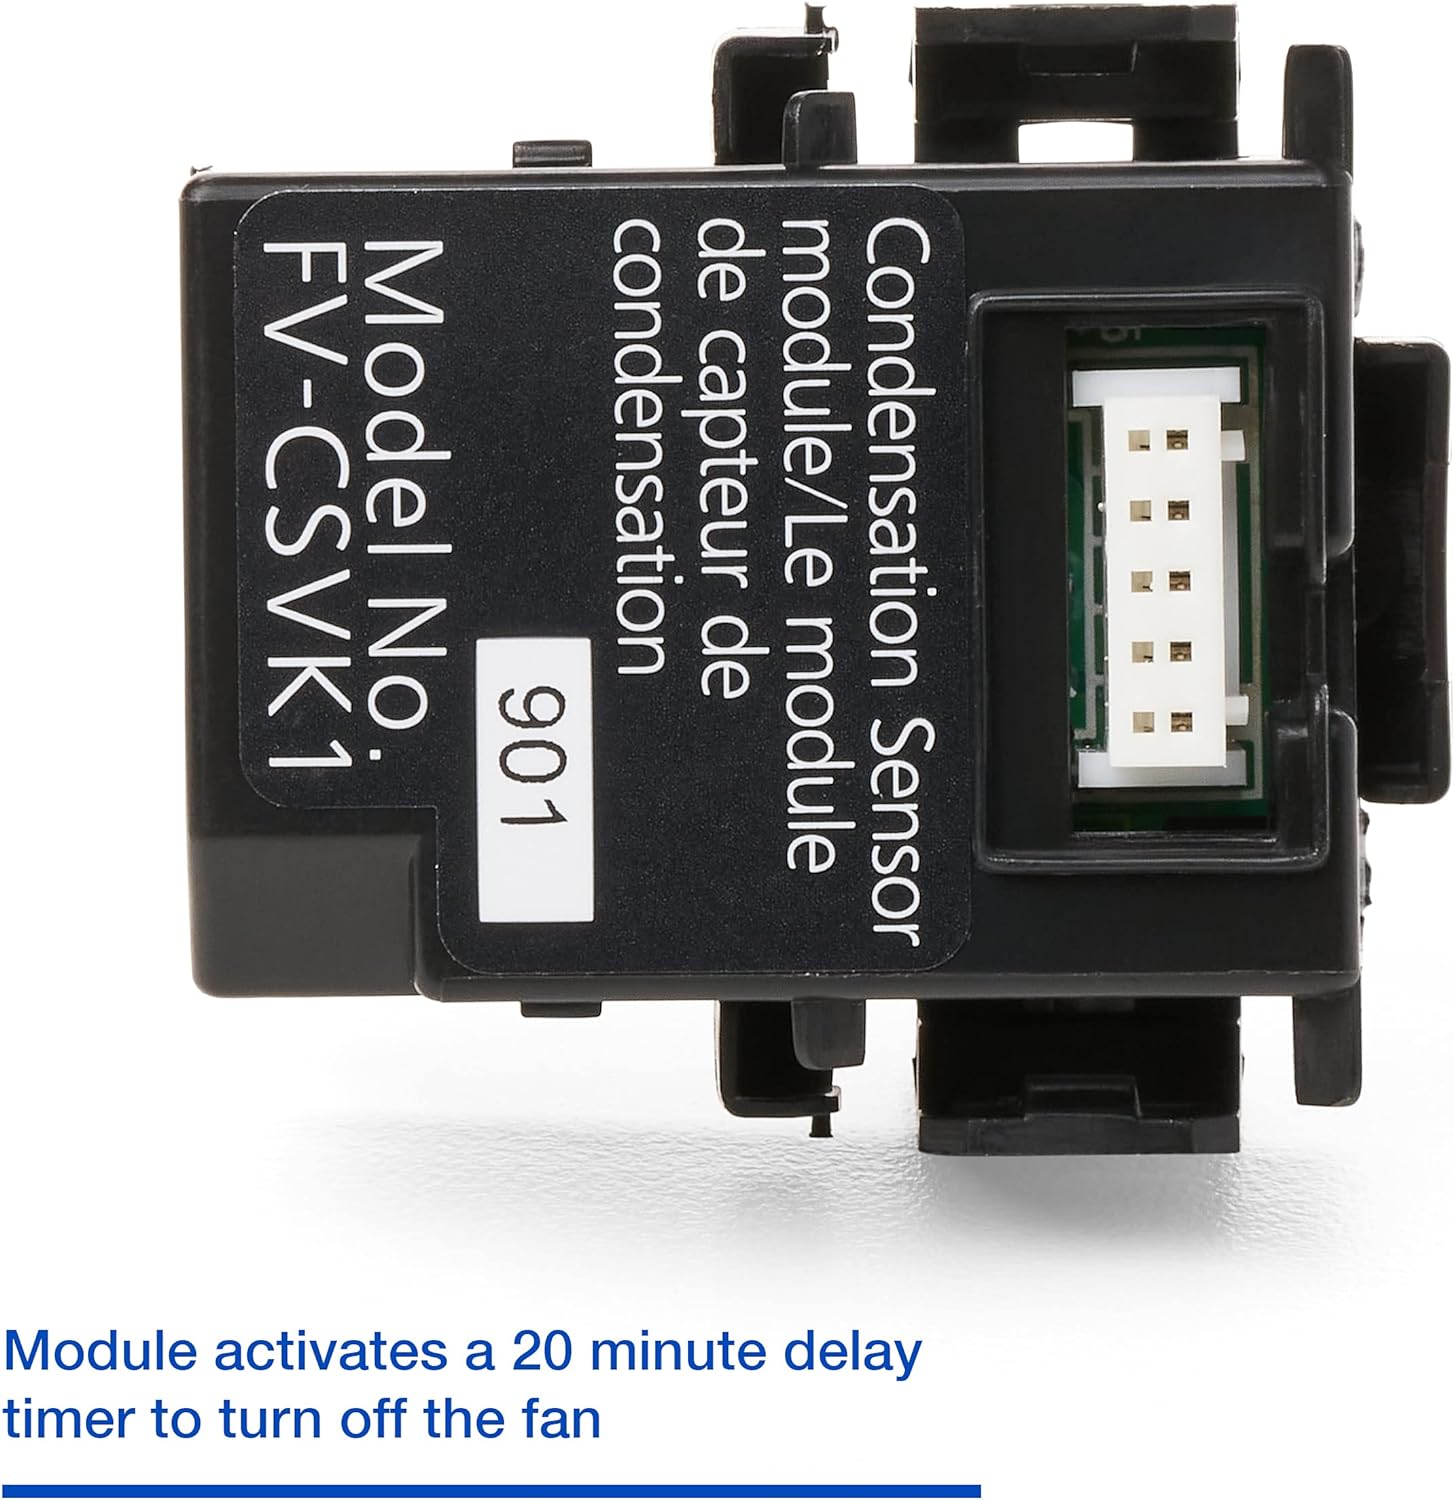 Panasonic FV-CSVK1 WhisperGreen Select Module - Condensation Sensor Module with Humidity Control